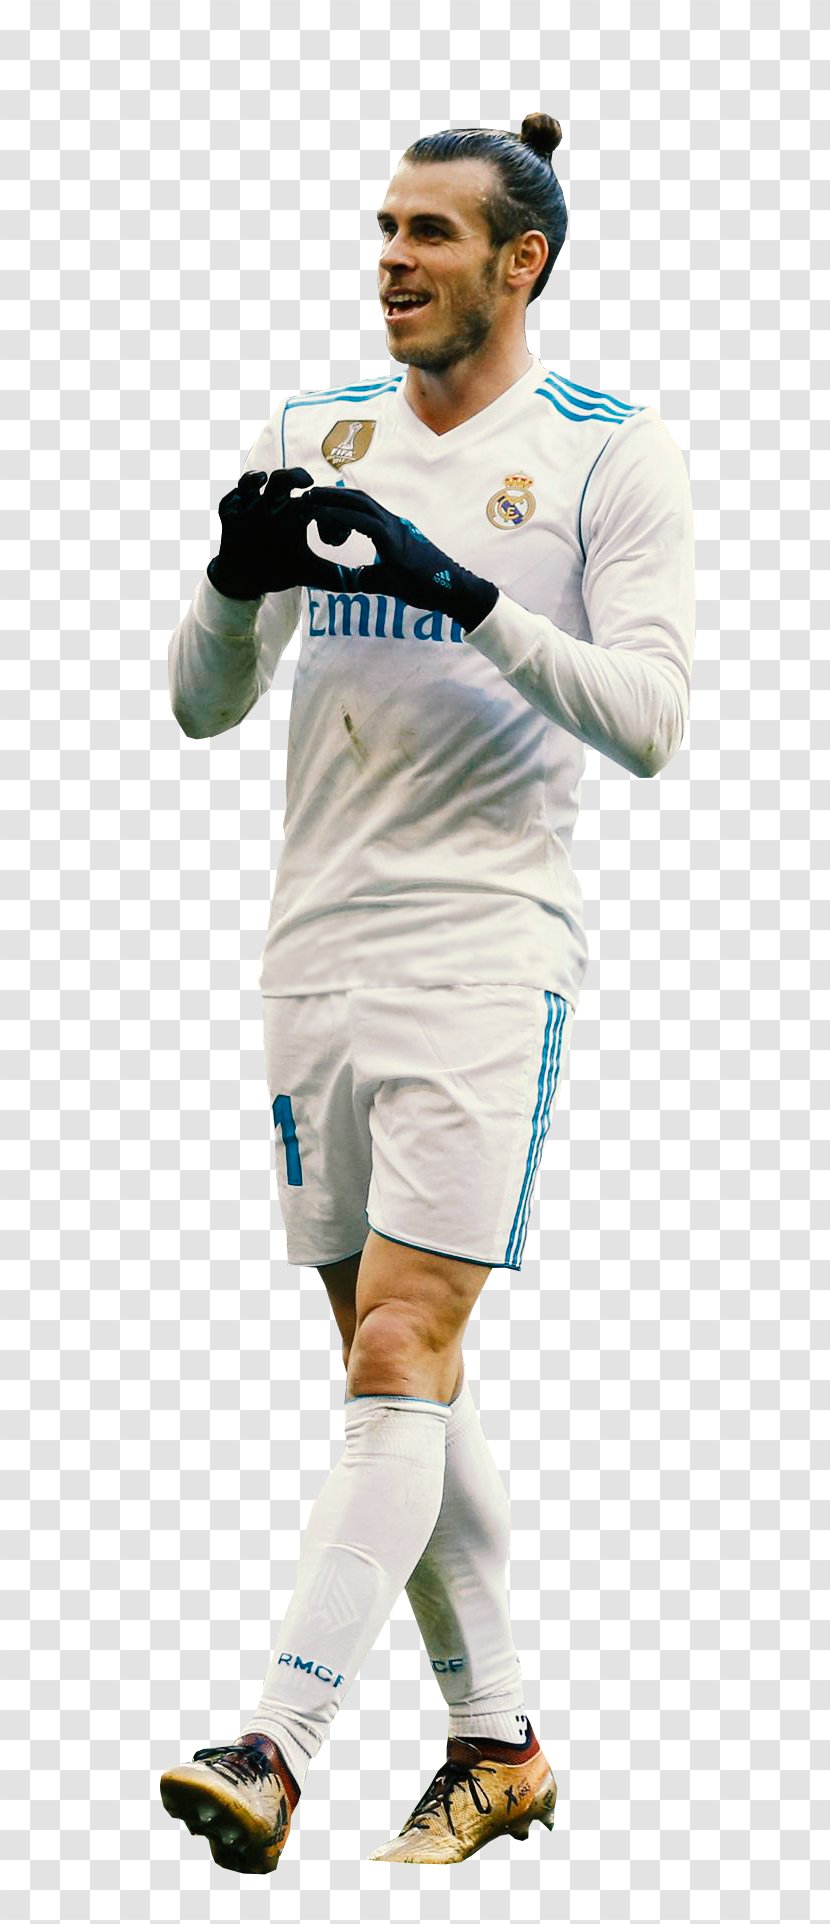 Cristiano Ronaldo Juventus F.C. Real Madrid C.F. Football Player Athlete - Sports Uniform Transparent PNG